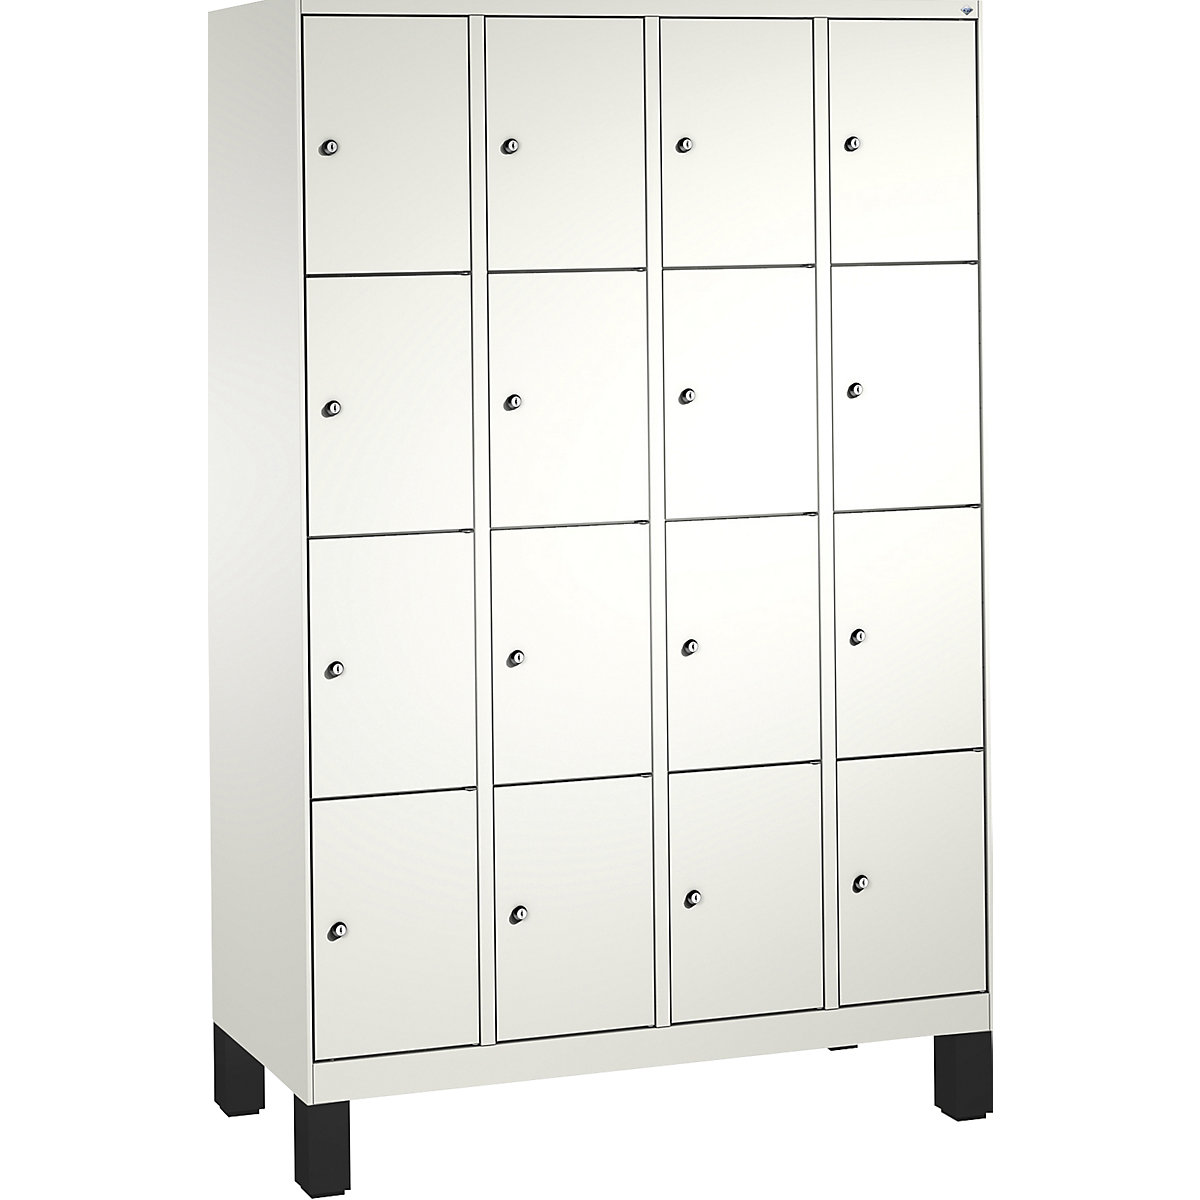 EVOLO locker unit, with feet – C+P, 4 compartments, 4 shelf compartments each, compartment width 300 mm, traffic white / traffic white-3